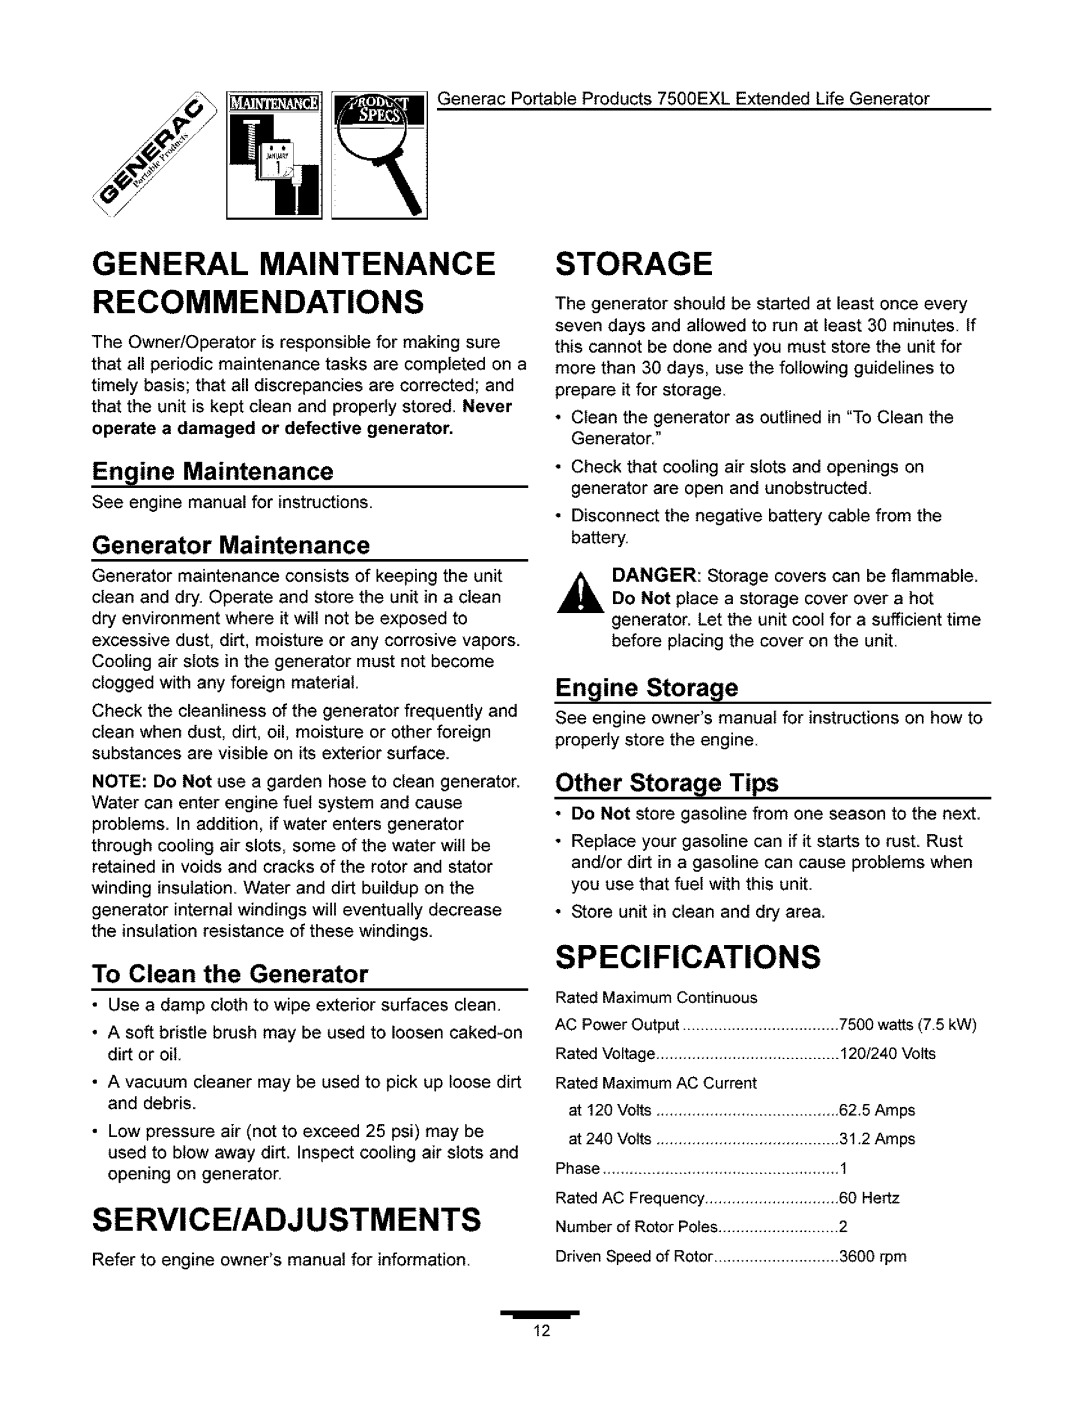 Generac 7500 General Maintenance Recommendations, Storage, Service/Adjustments, Specifications, Engine Maintenance 